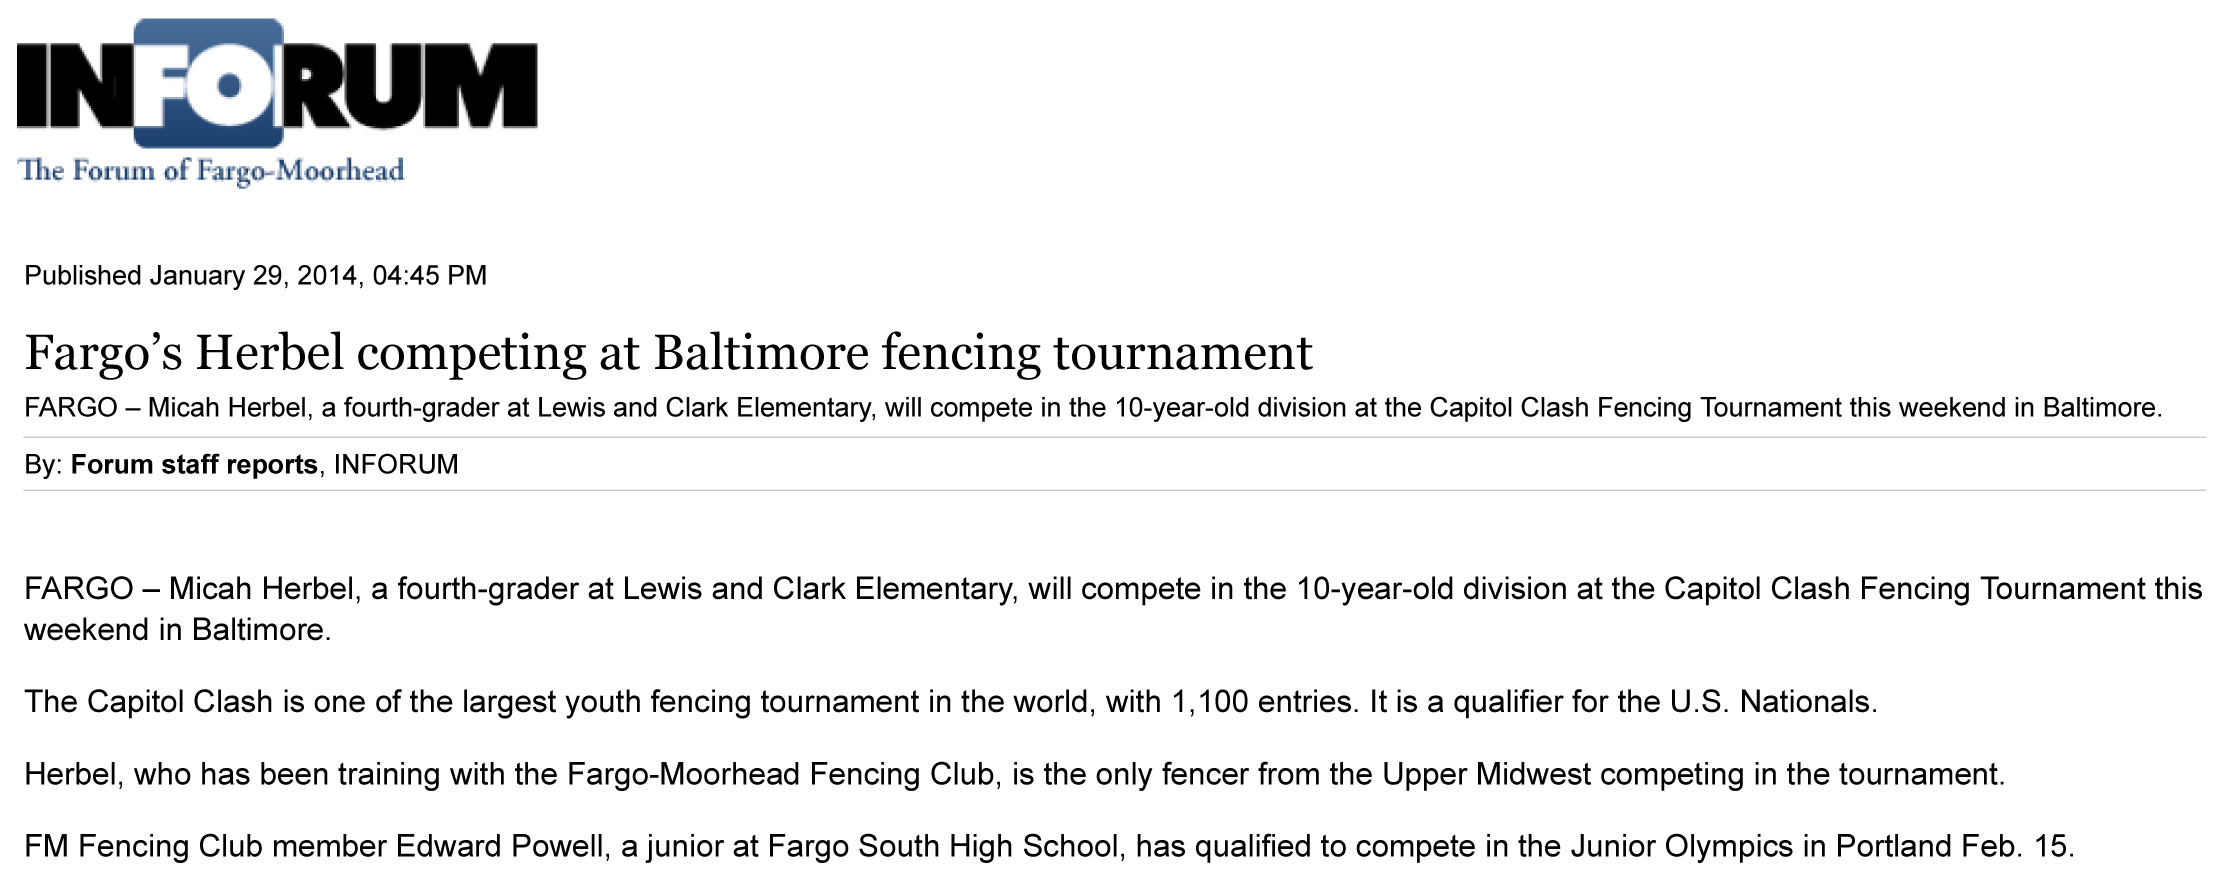 Fargos Herbel competing at Baltimore fencing tournament   INFORUM   Fargo ND